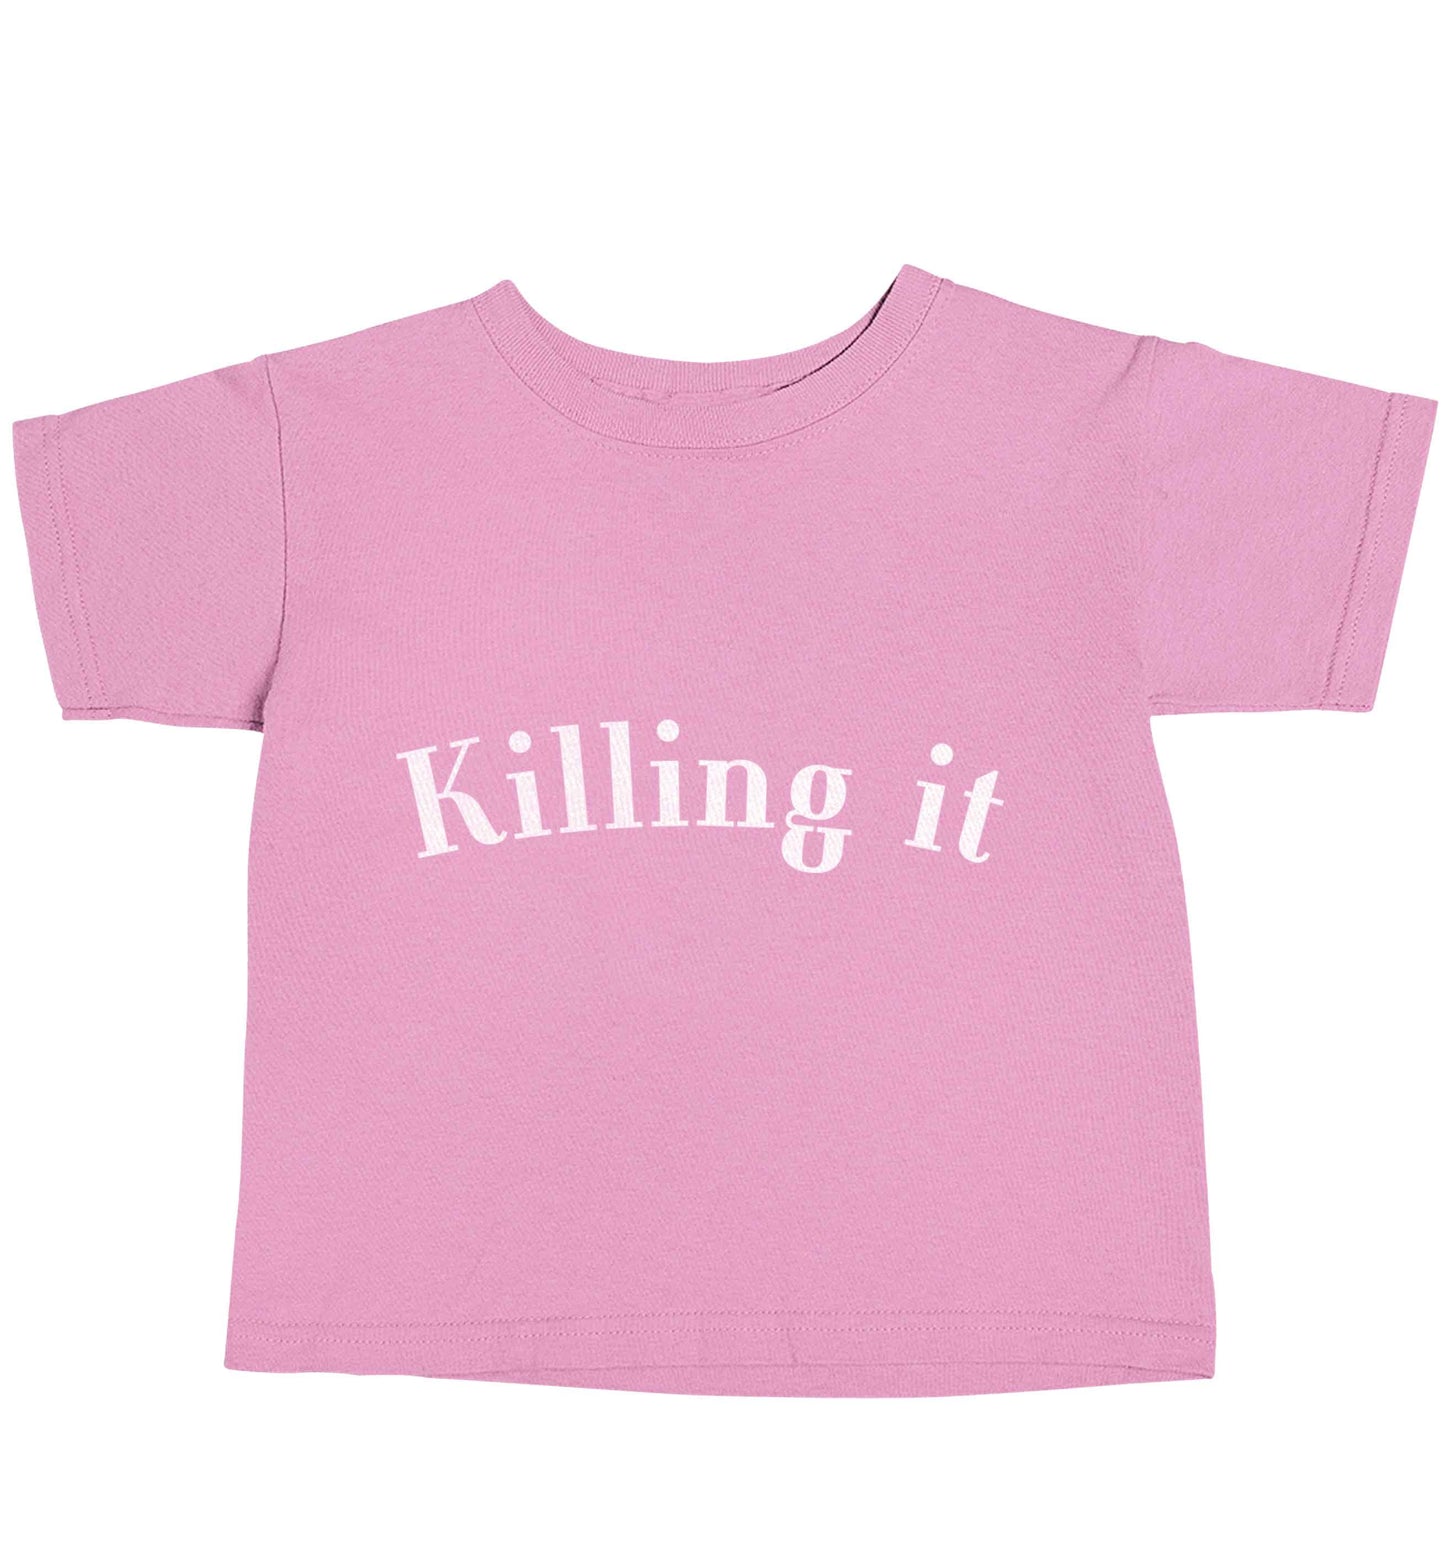 Killing it light pink baby toddler Tshirt 2 Years